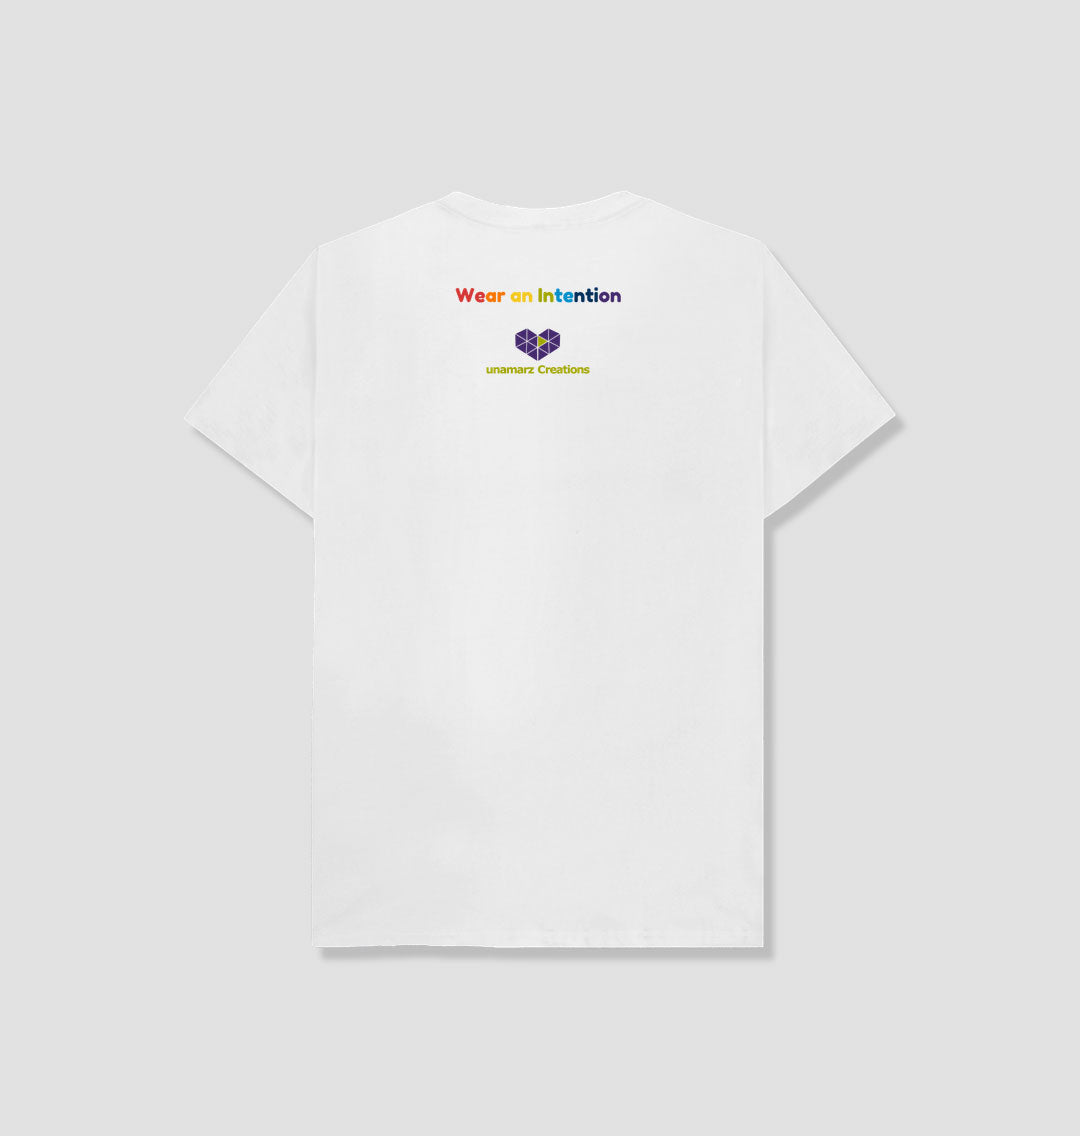 Collective Heart Kids T-shirt W